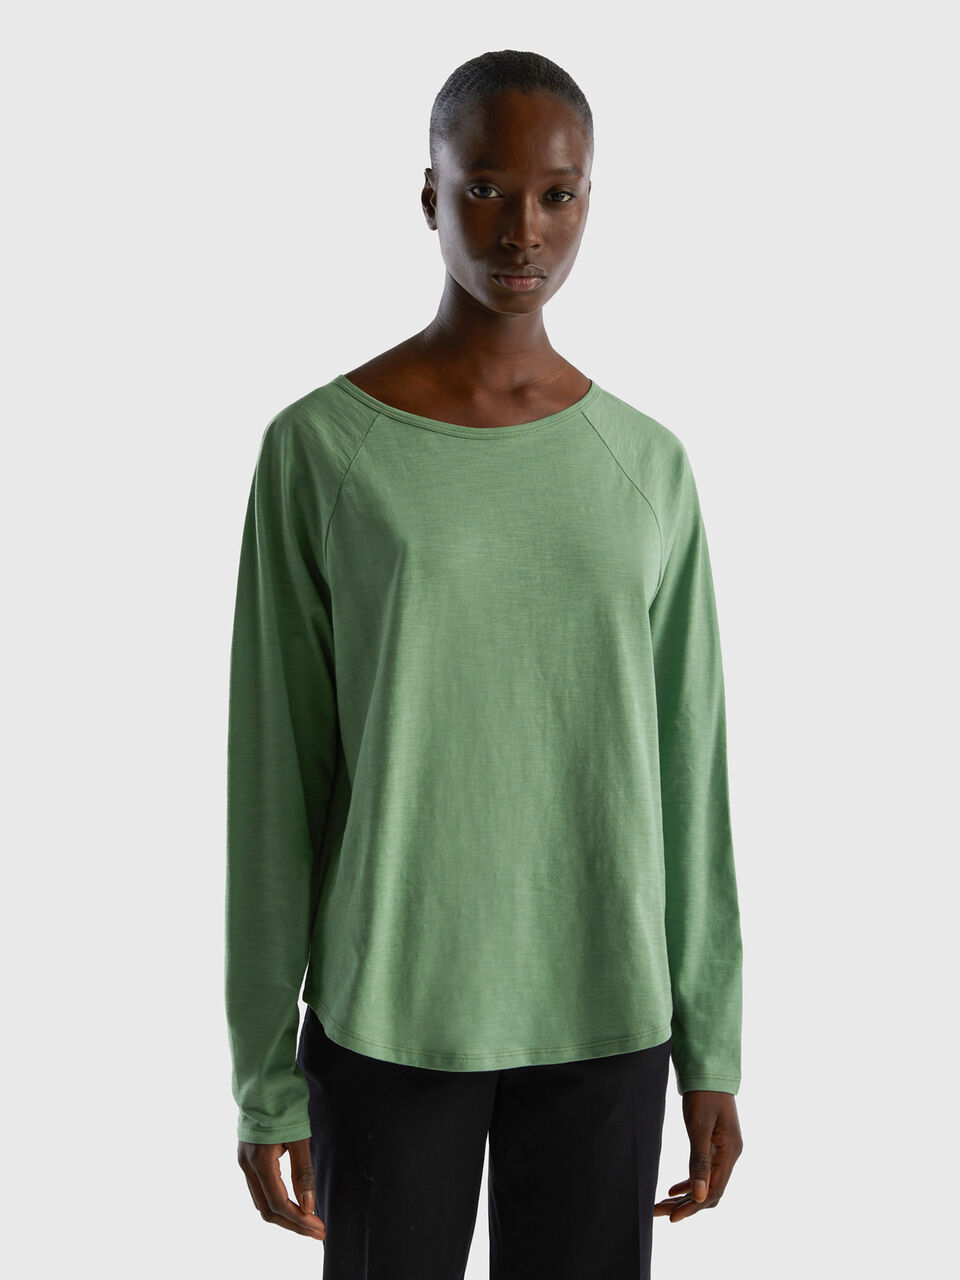 Camiseta 100% algodón de manga larga en color verde